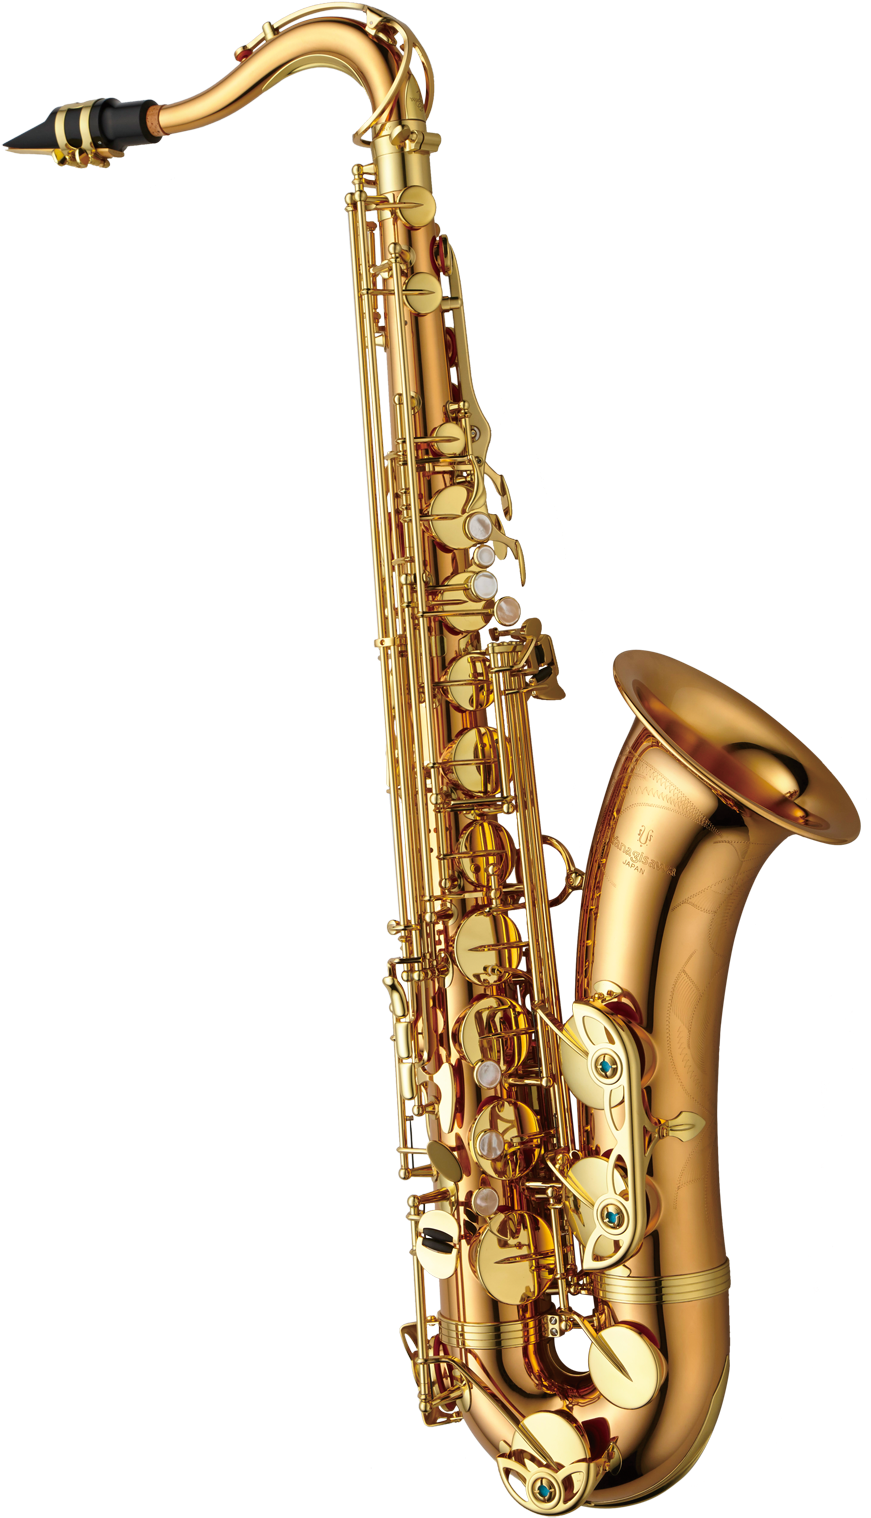 A Close Up Of A Saxophone